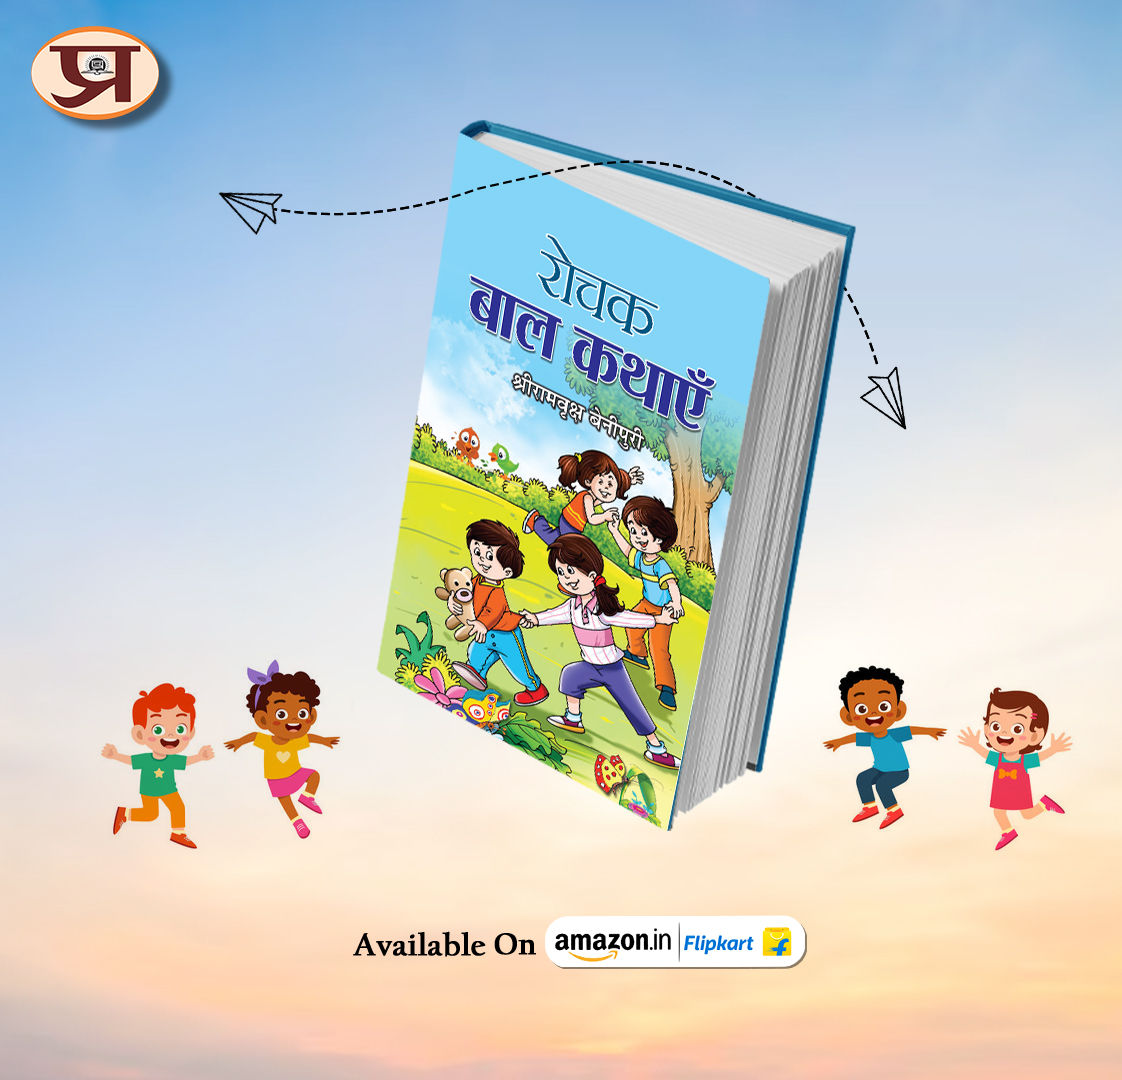 पुस्तक : 'रोचक बाल कथाएँ'
लेखक : श्रीरामवृक्ष बेनीपुरी 
पुस्तक लिंक : amzn.to/3WnqFuv

#RochakBalKathayen #ShriramvrikshaBenipuri #ChildrensBook #PrabhatBooks